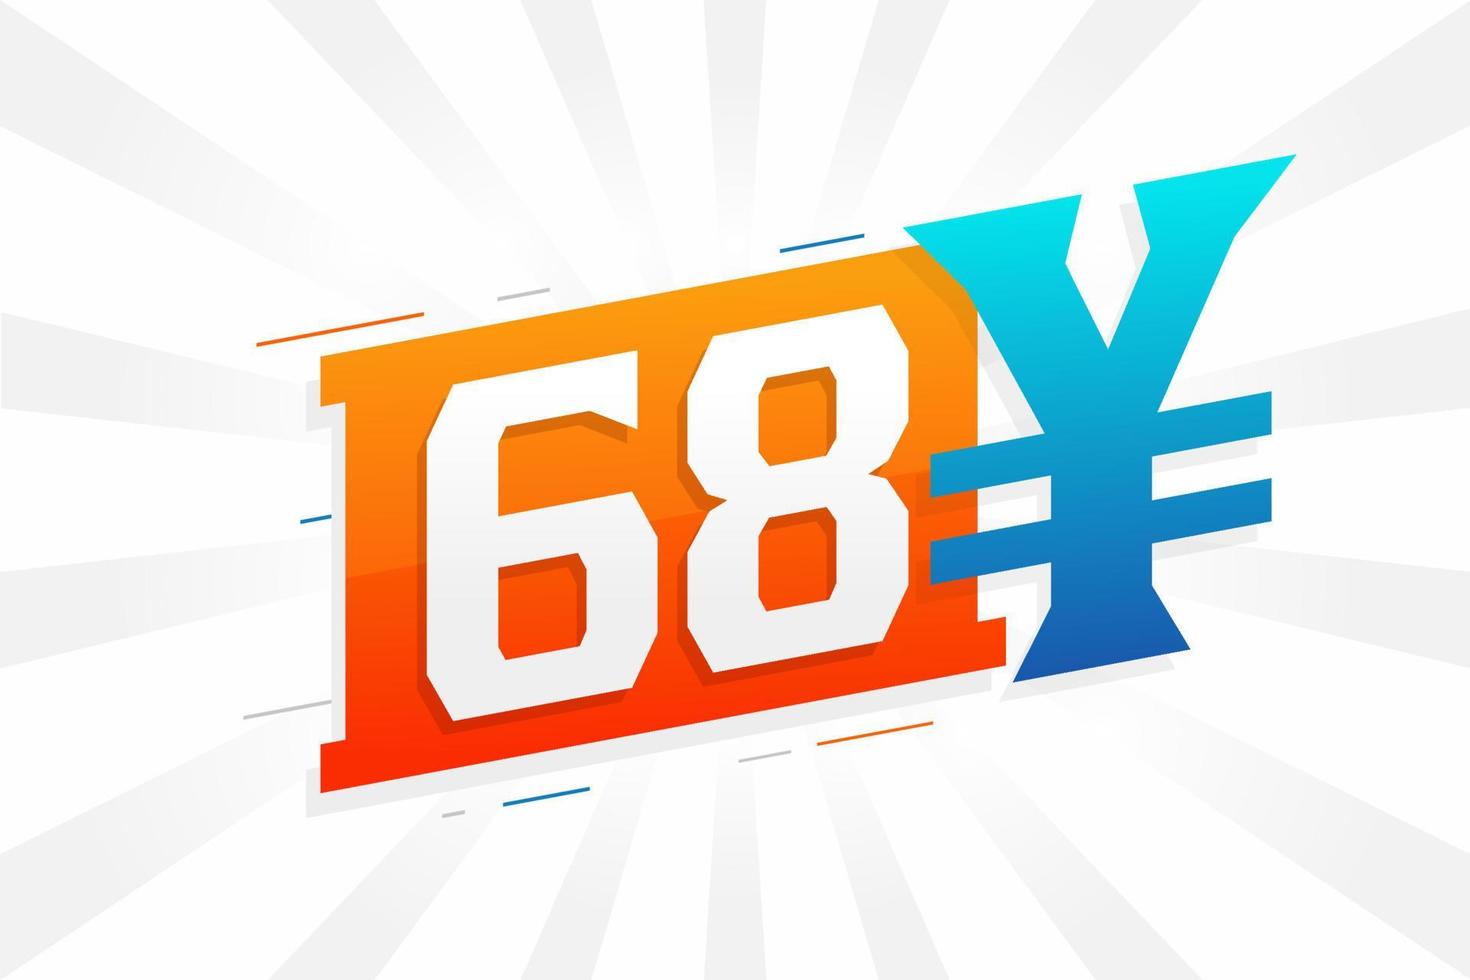 68 yuan Cinese moneta vettore testo simbolo. 68 yen giapponese moneta i soldi azione vettore